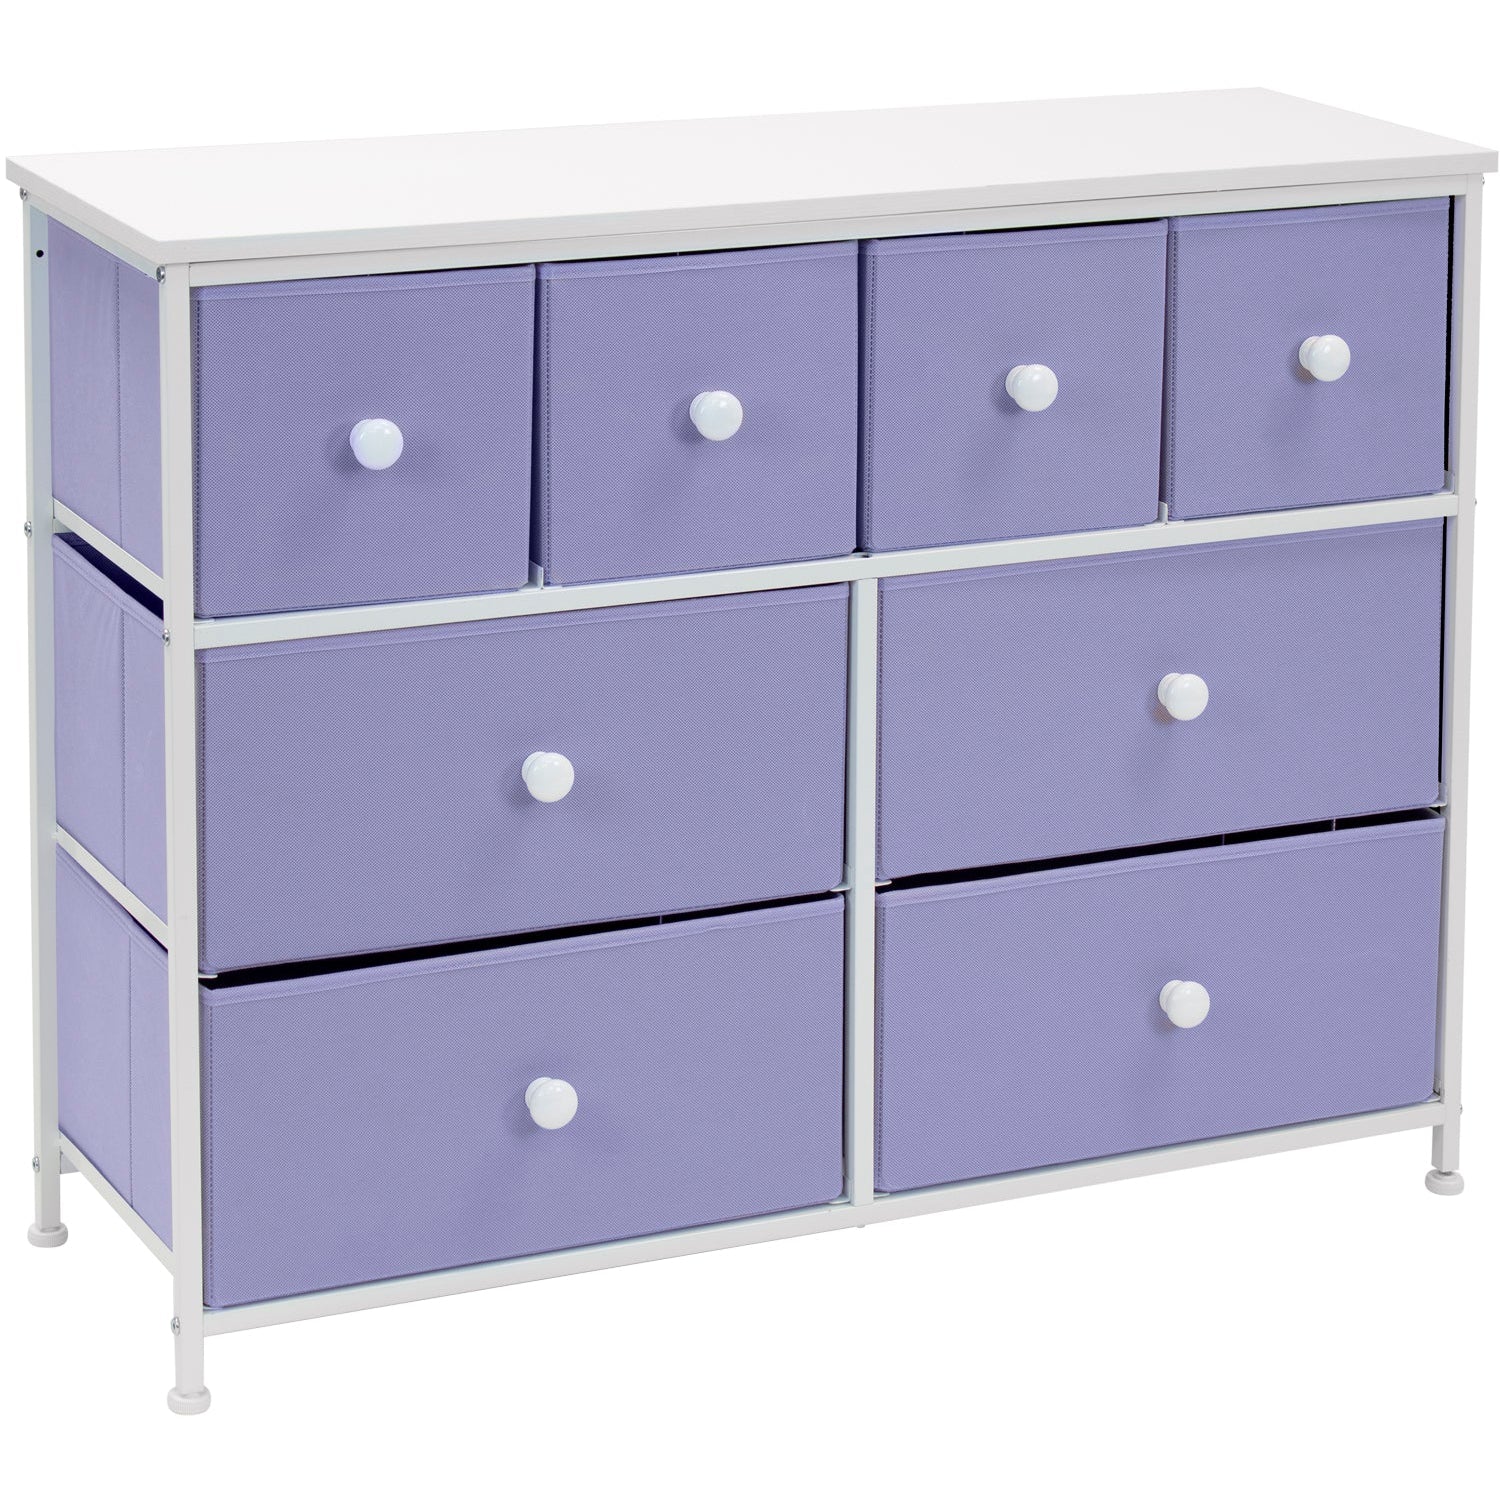 8-Drawer Chest Dresser w/knobs (Pastel Colors)